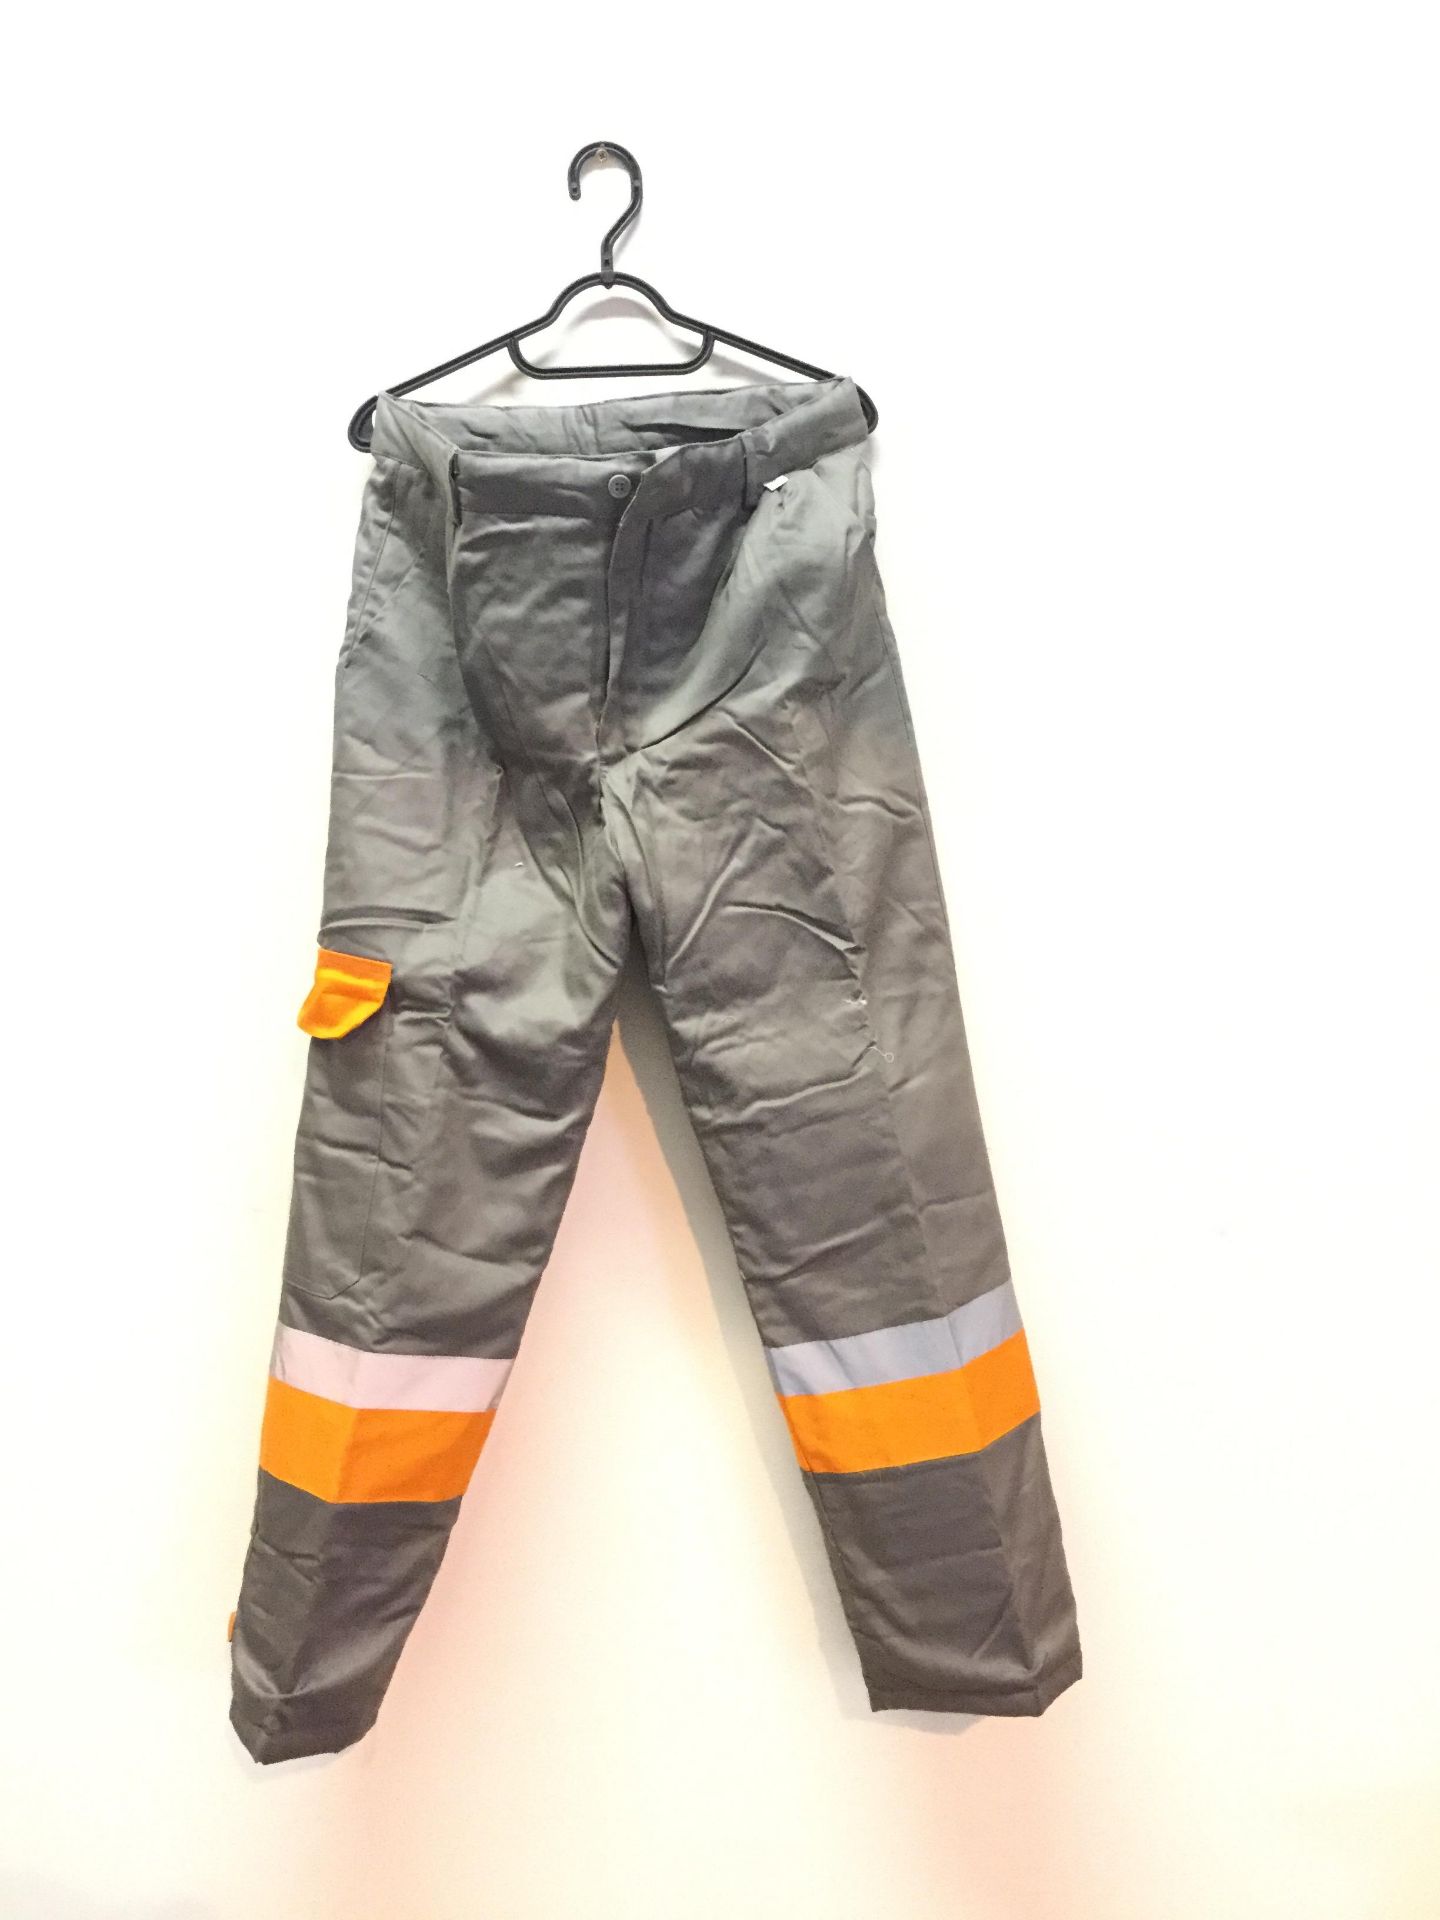 Flame Retardant Winter Trousers - Size 62